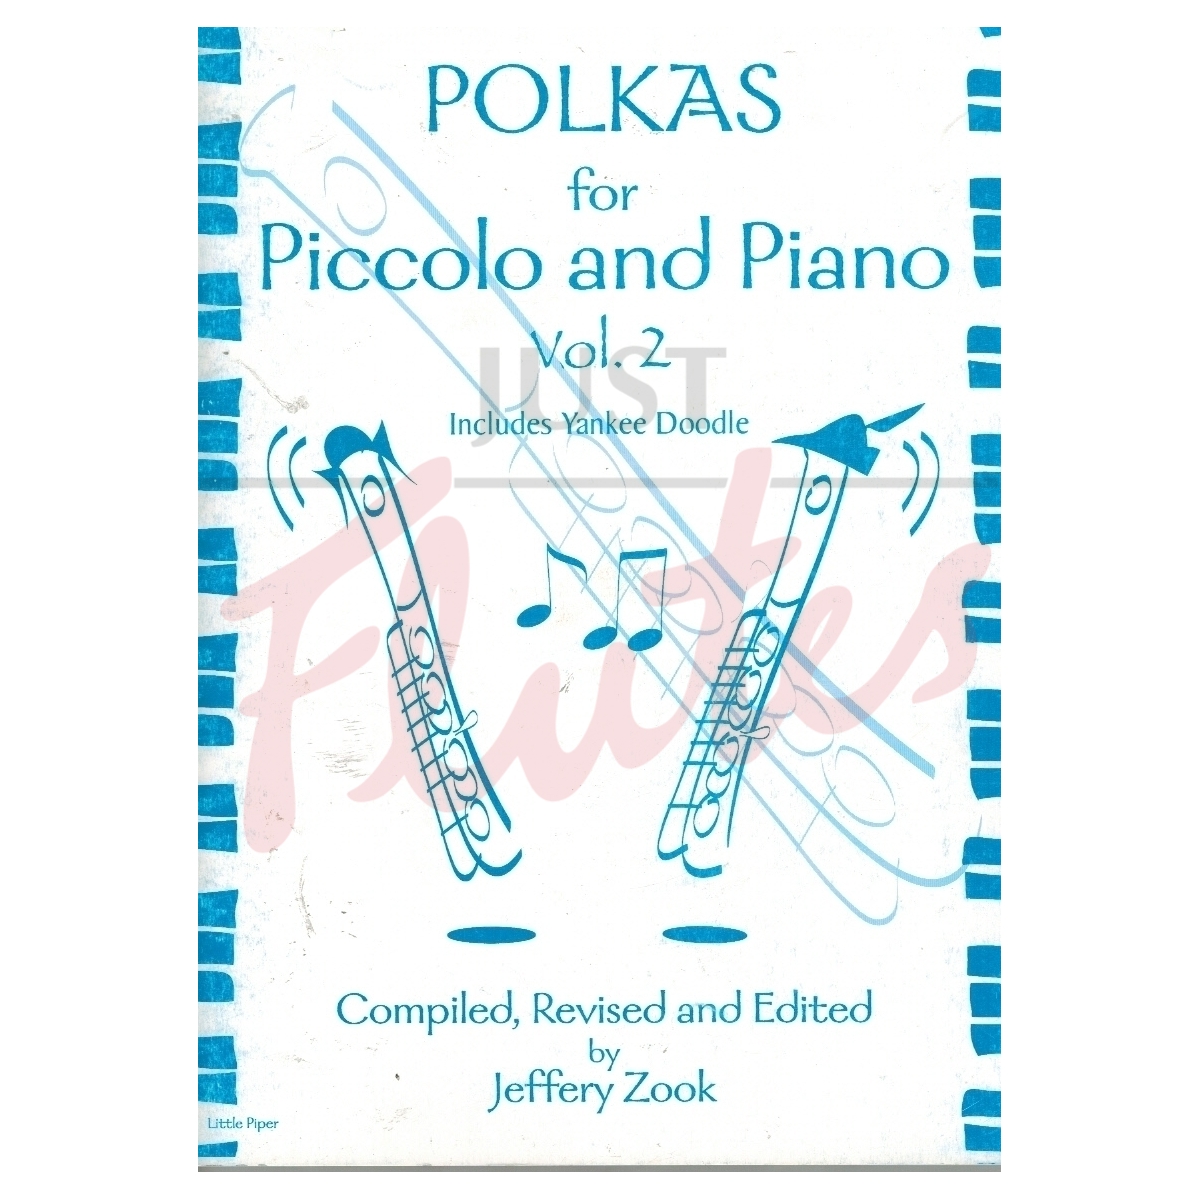 Polkas for Piccolo and Piano, Vol 2